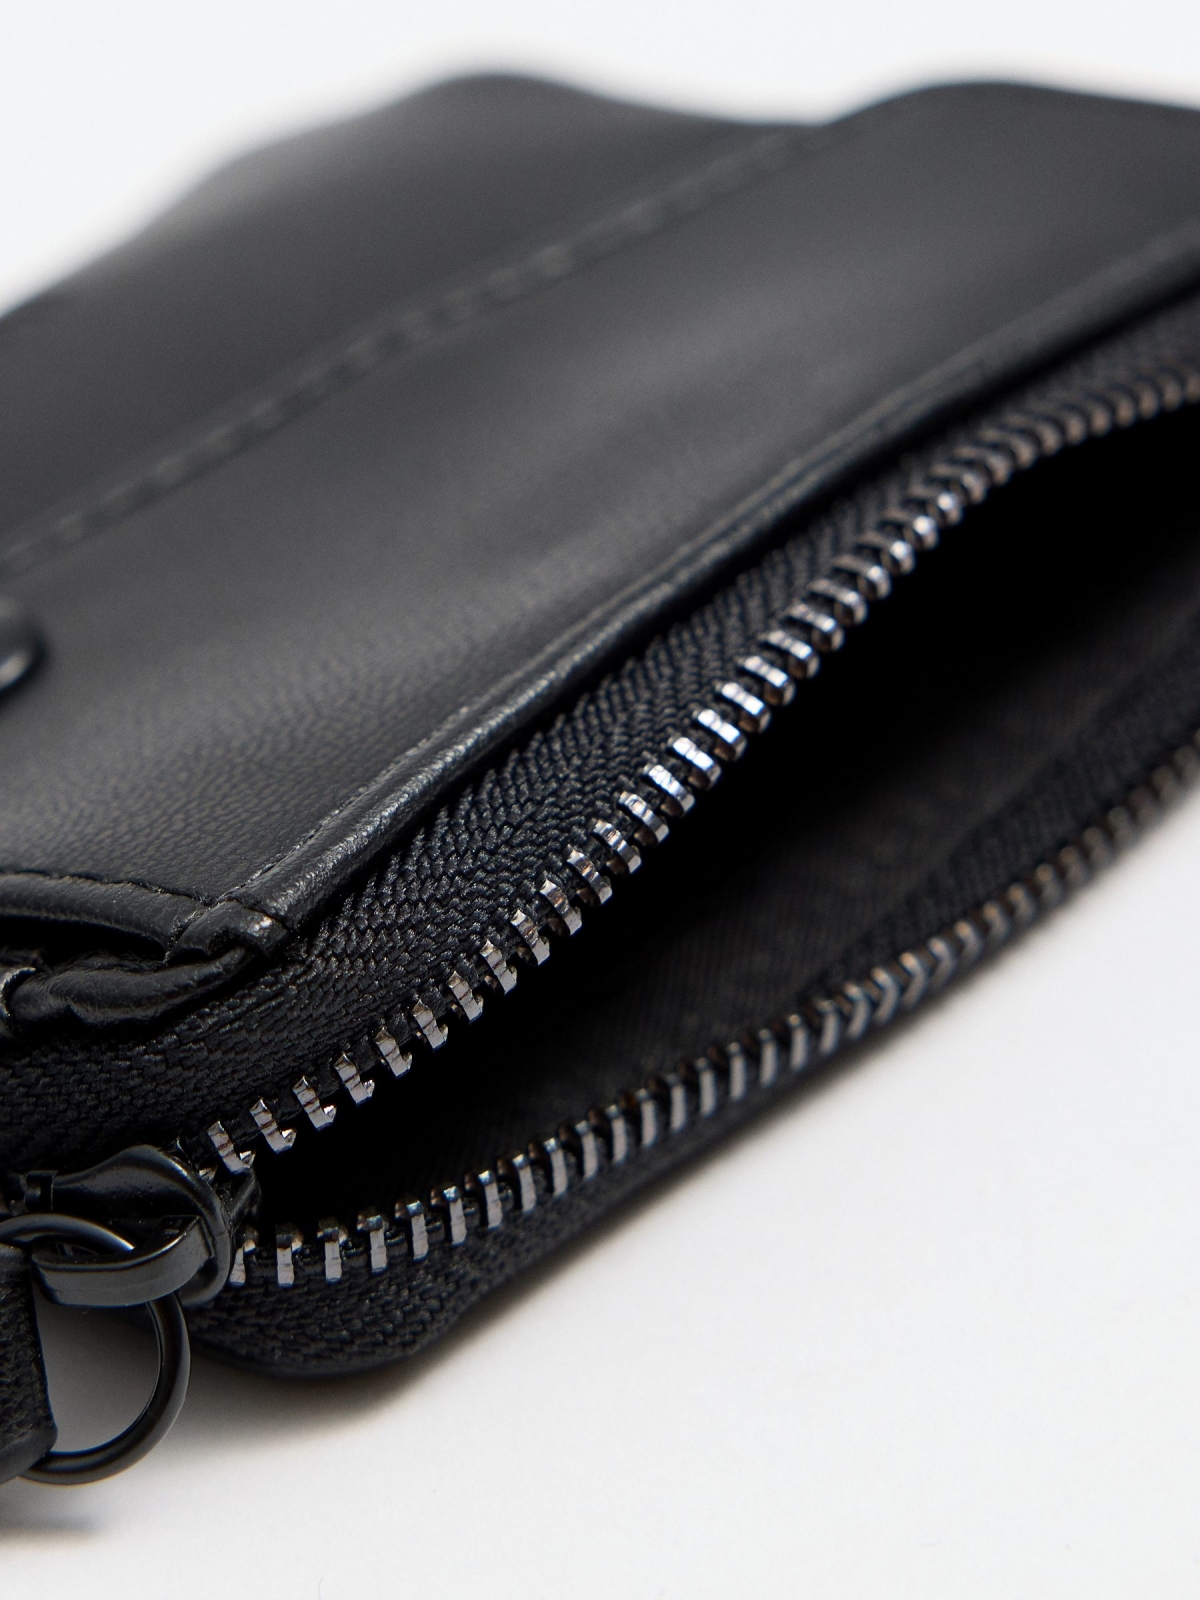 Black leather effect purse black detail view